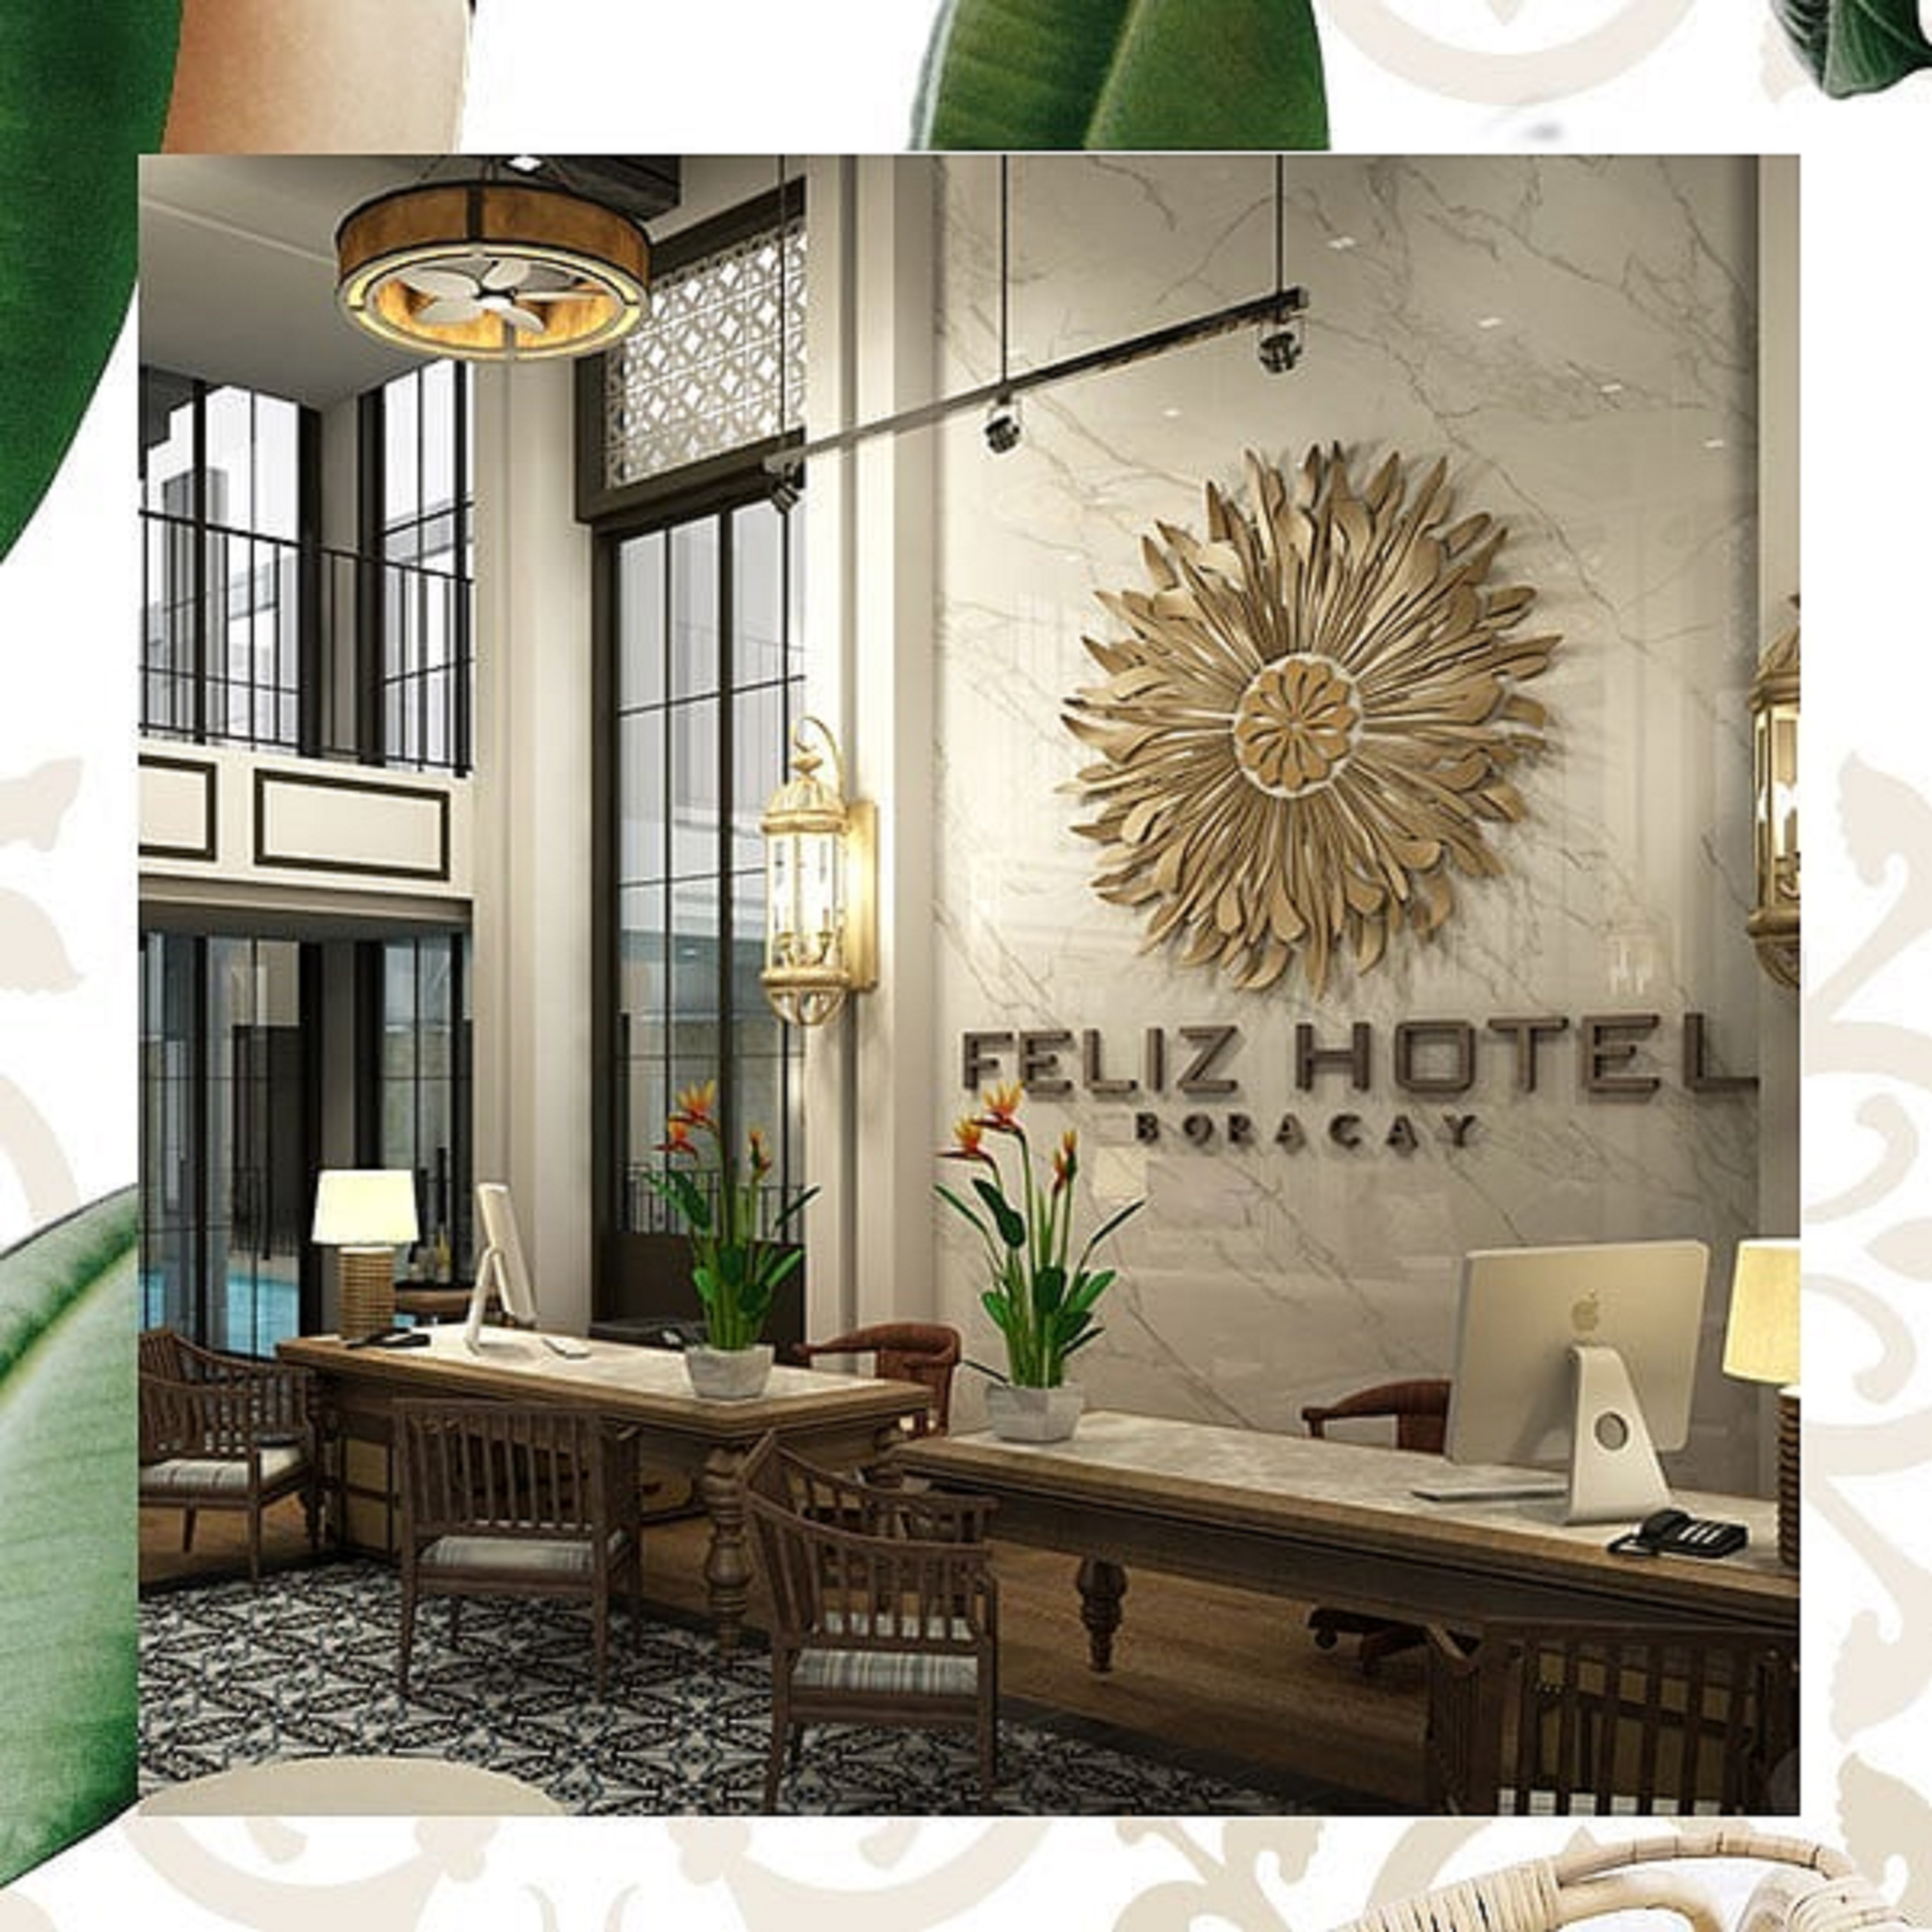 Feliz Hotel Boracay image